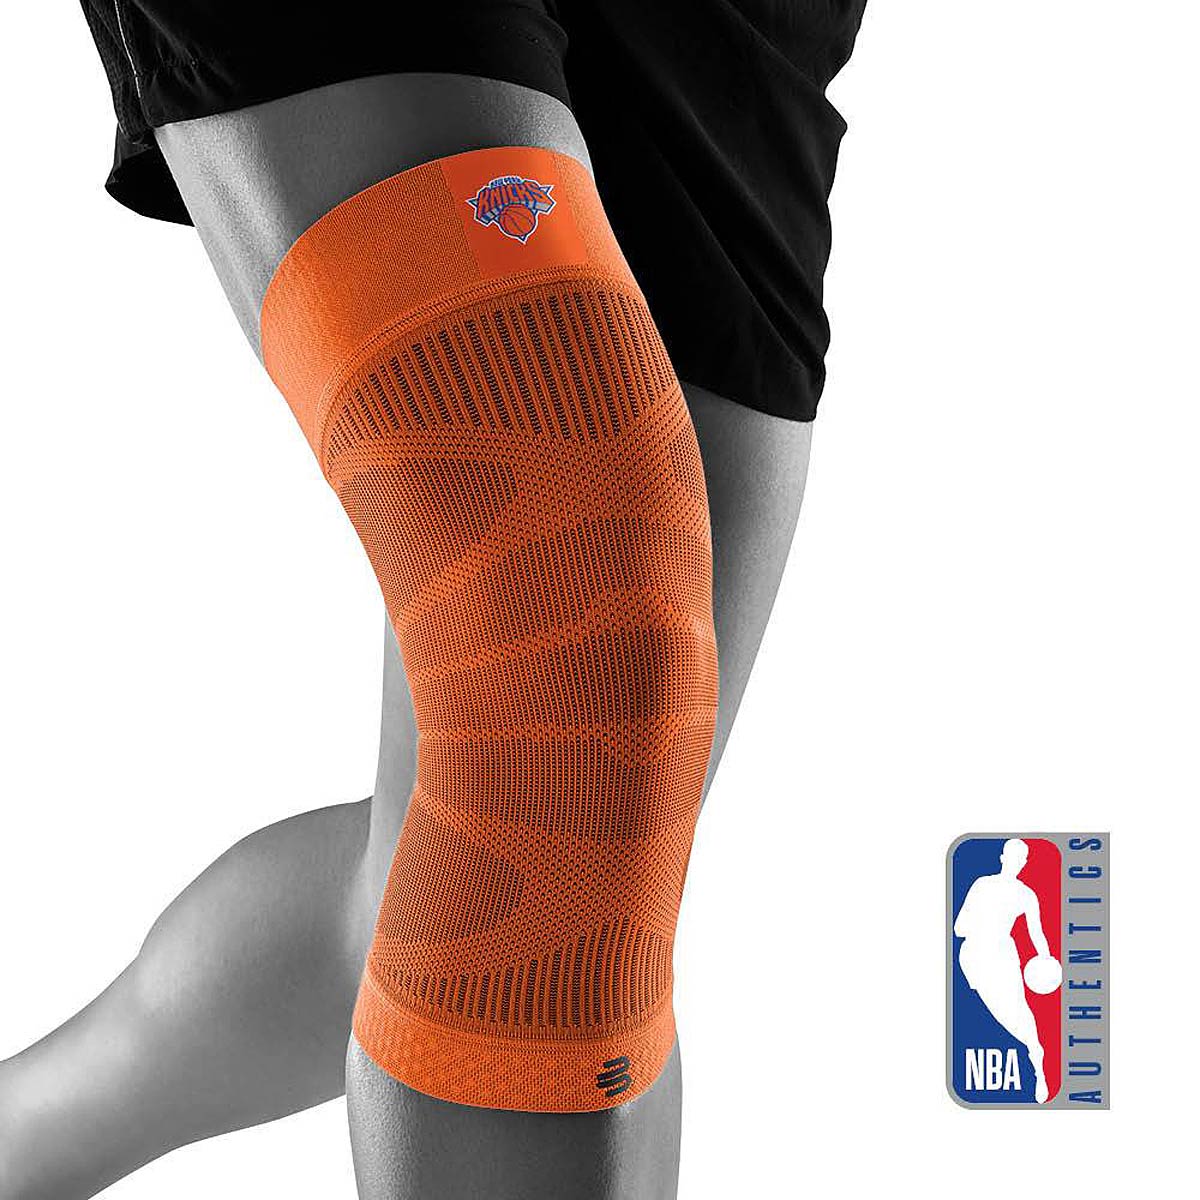 Bauerfeind Nba Sports Compression Knee Support New York Knicks, Knicks Orange